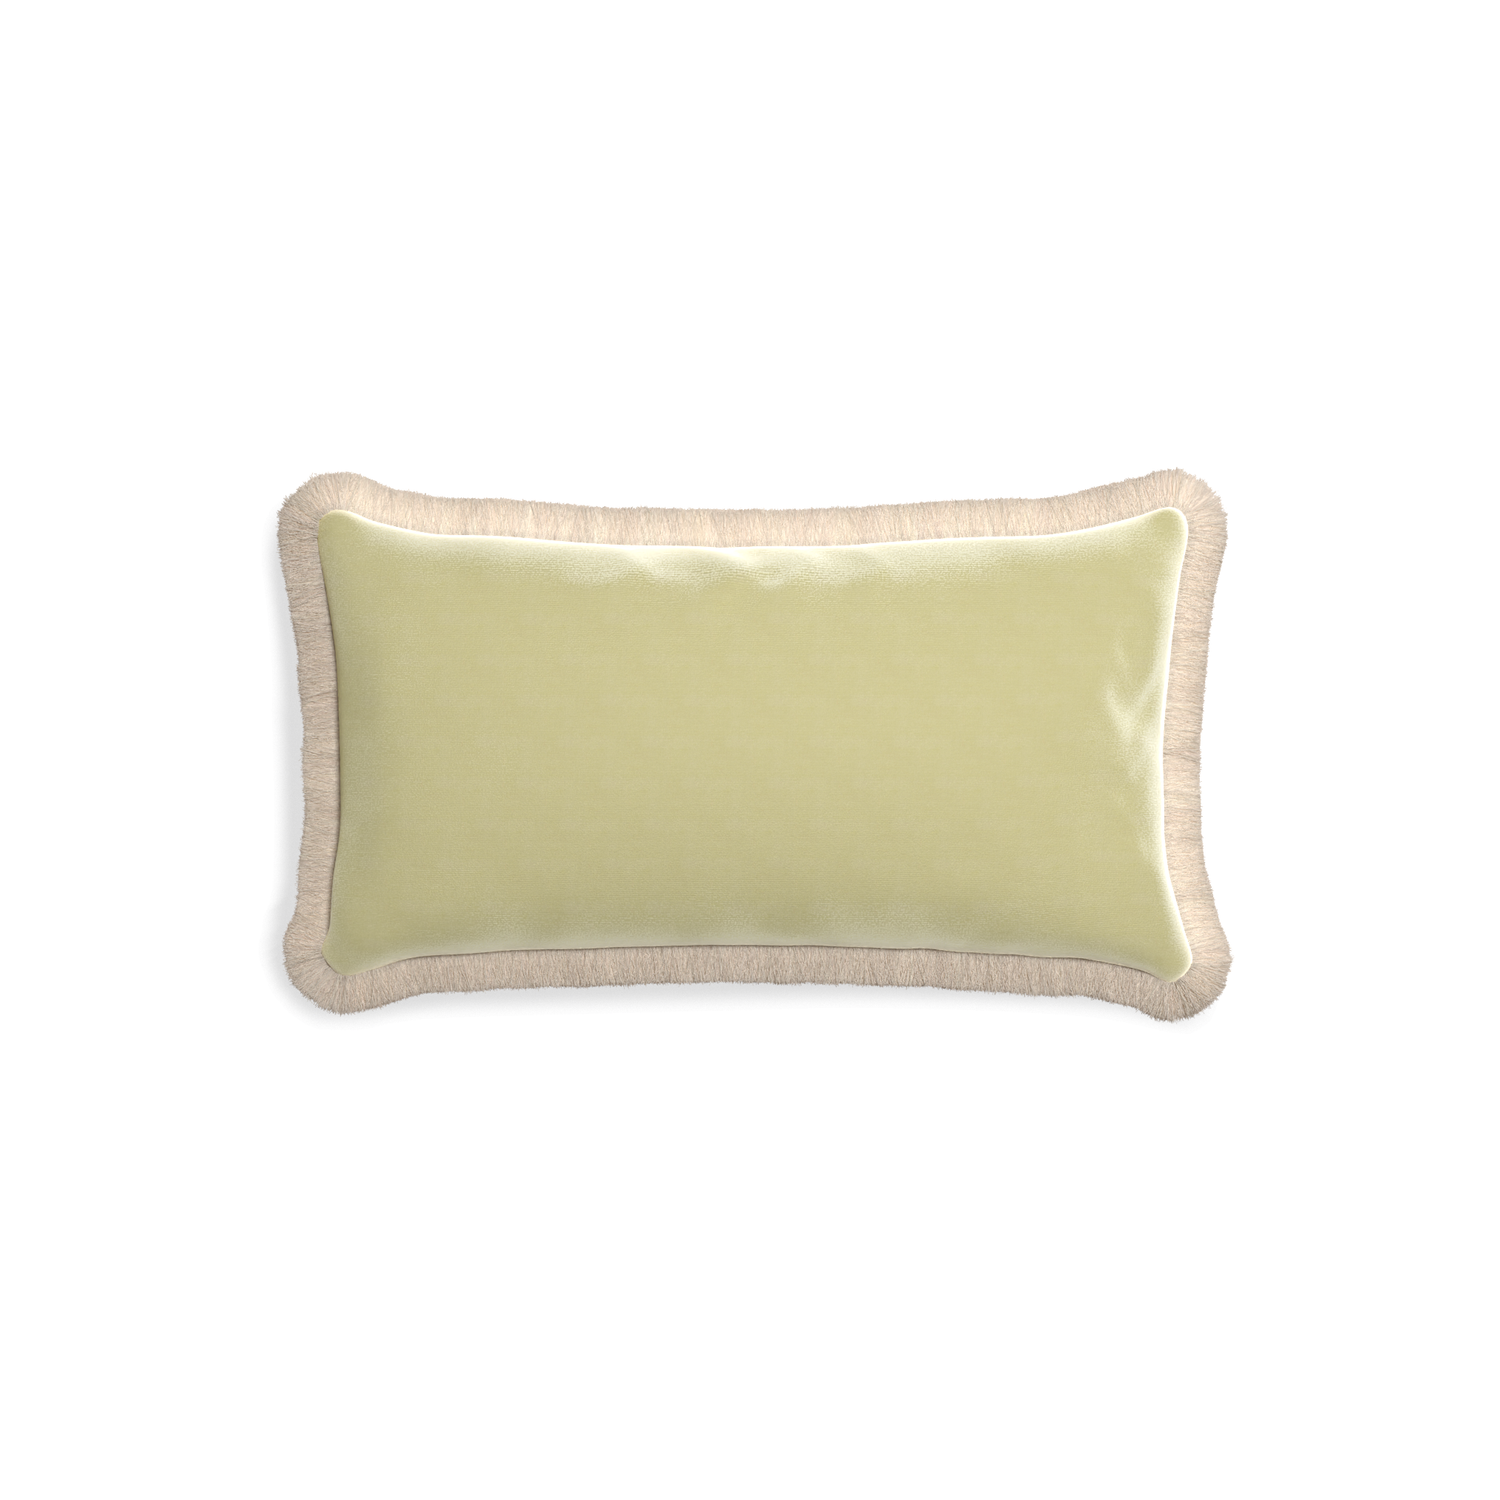 rectangle light green pillow with cream fringe